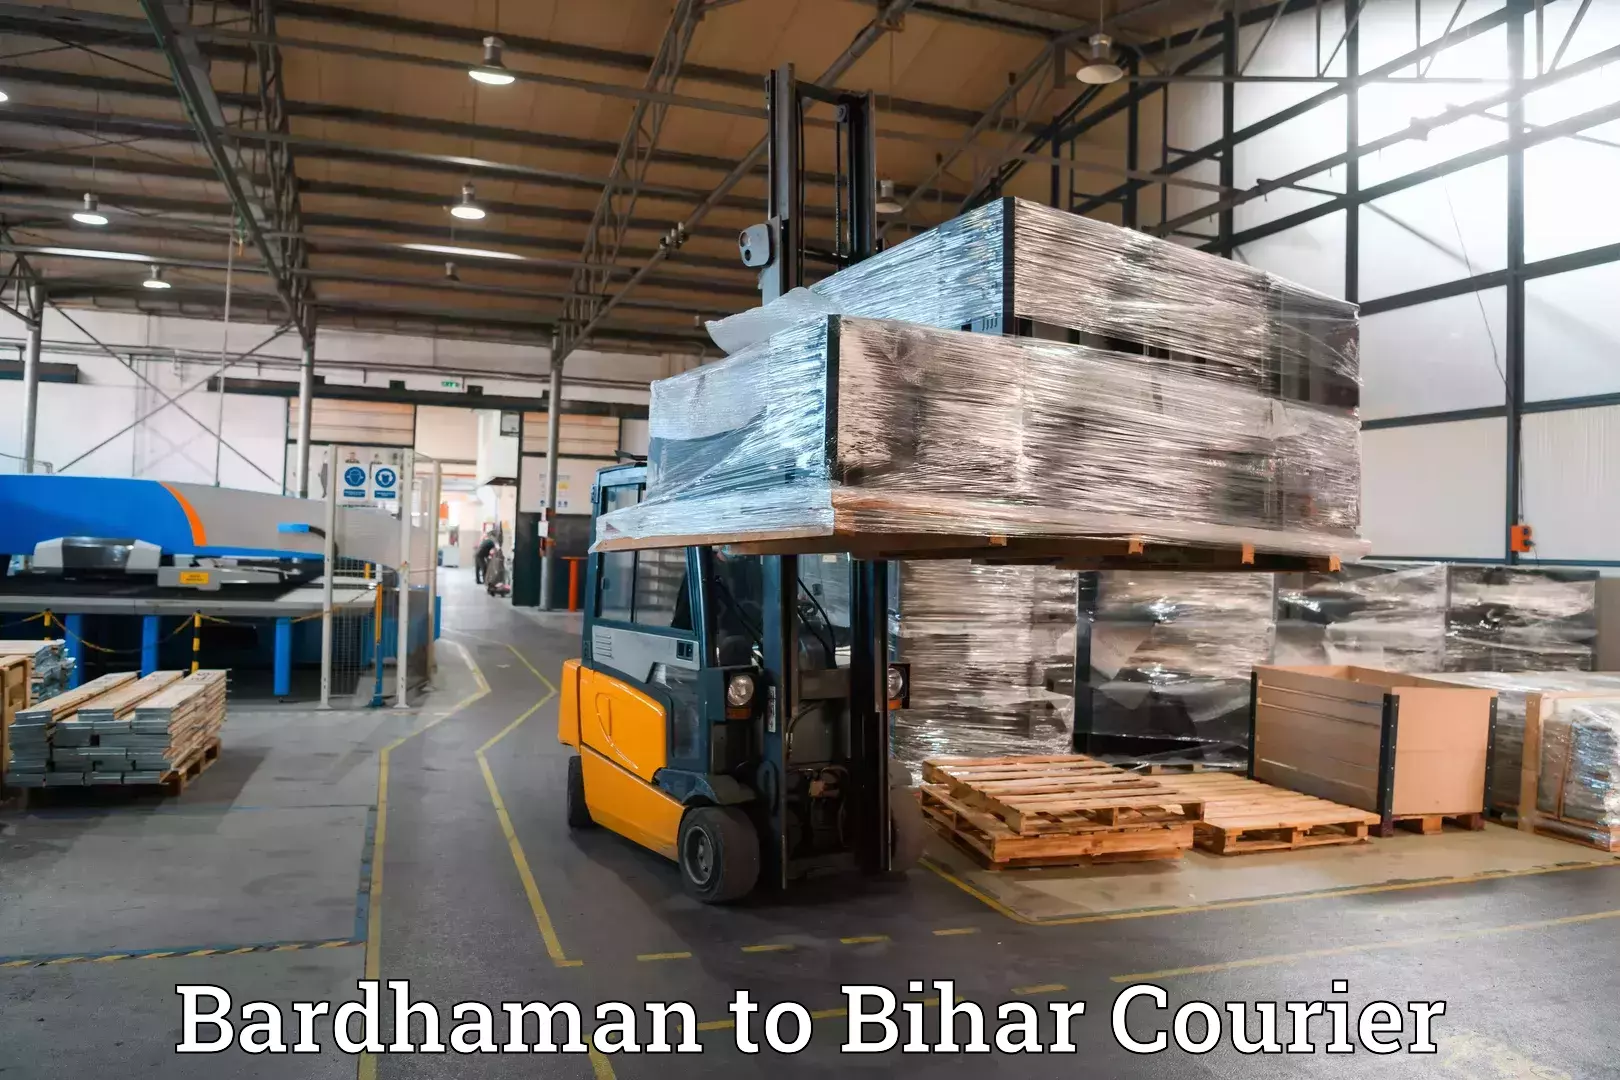 Luggage delivery app Bardhaman to Bagaha